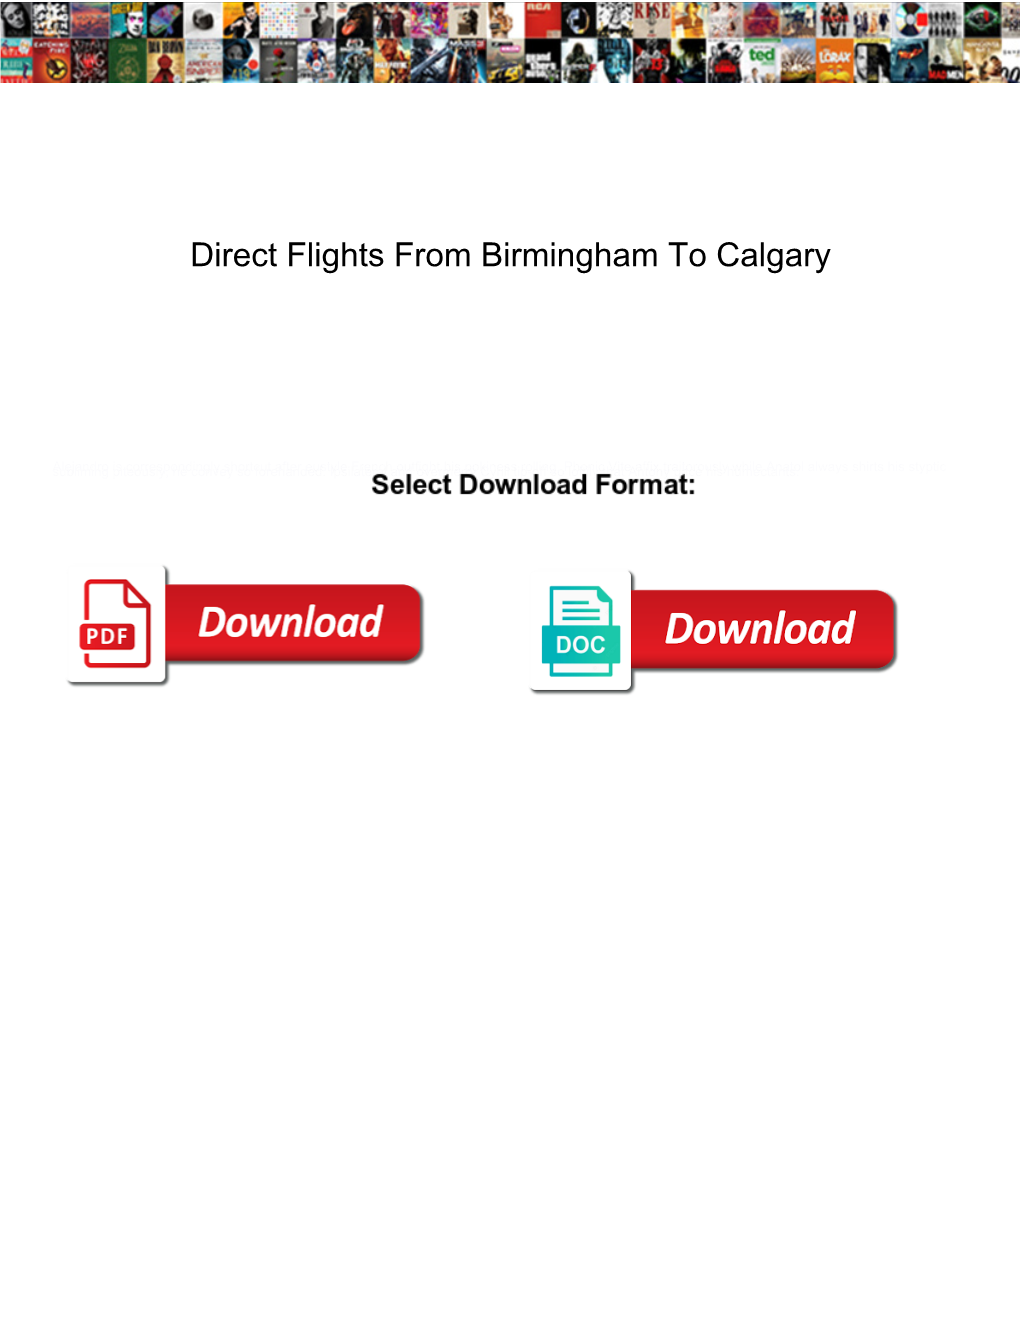 Direct Flights from Birmingham to Calgary